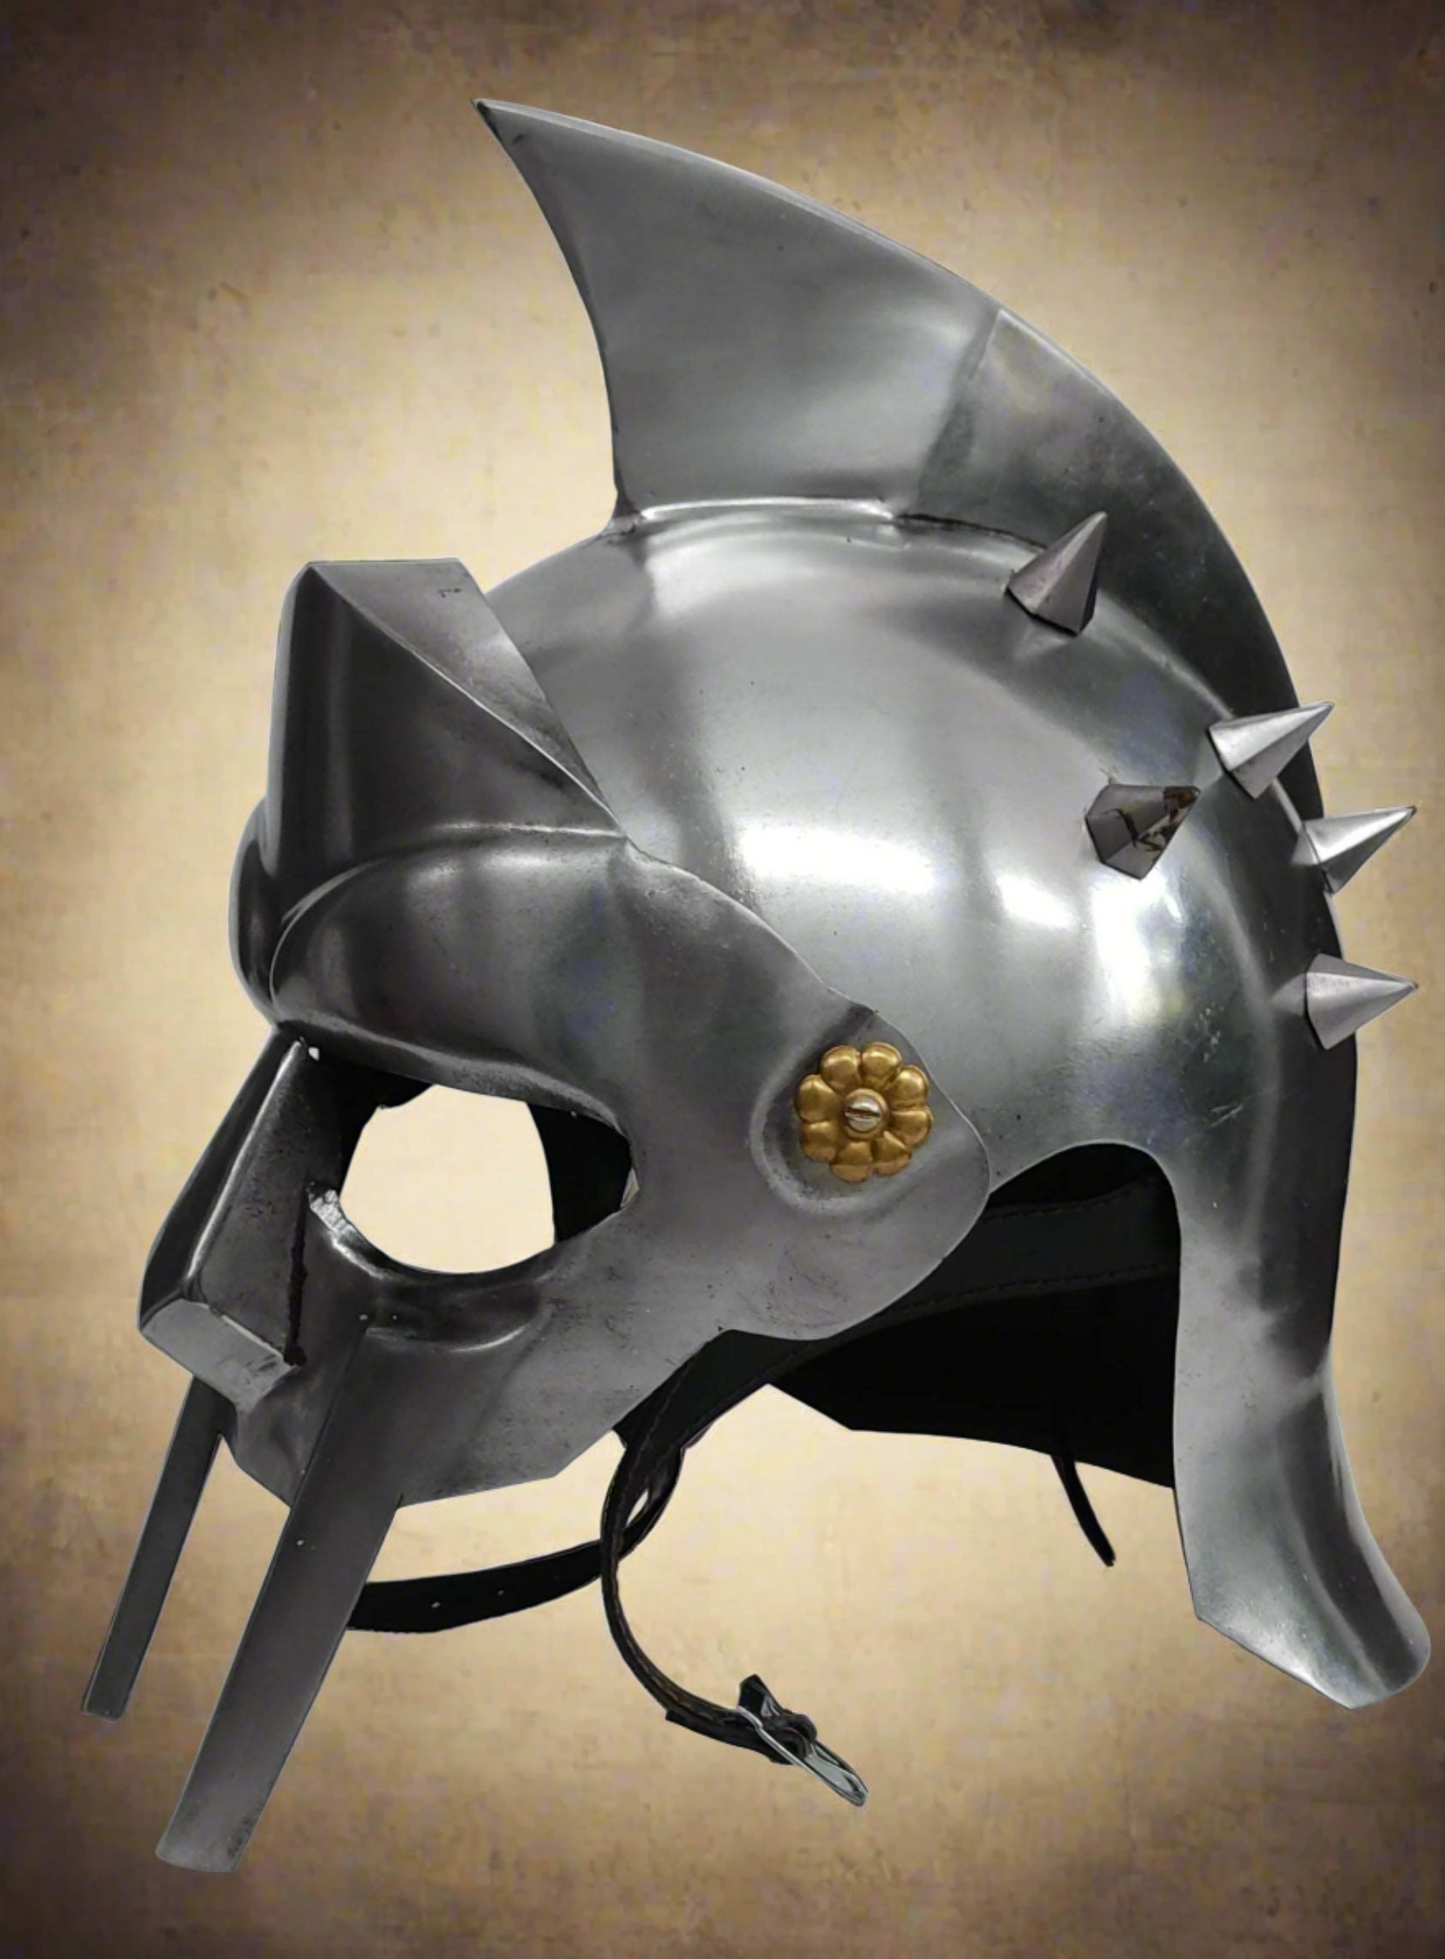 Gladiator Helmet - Medieval Armor Helmets by Aladean